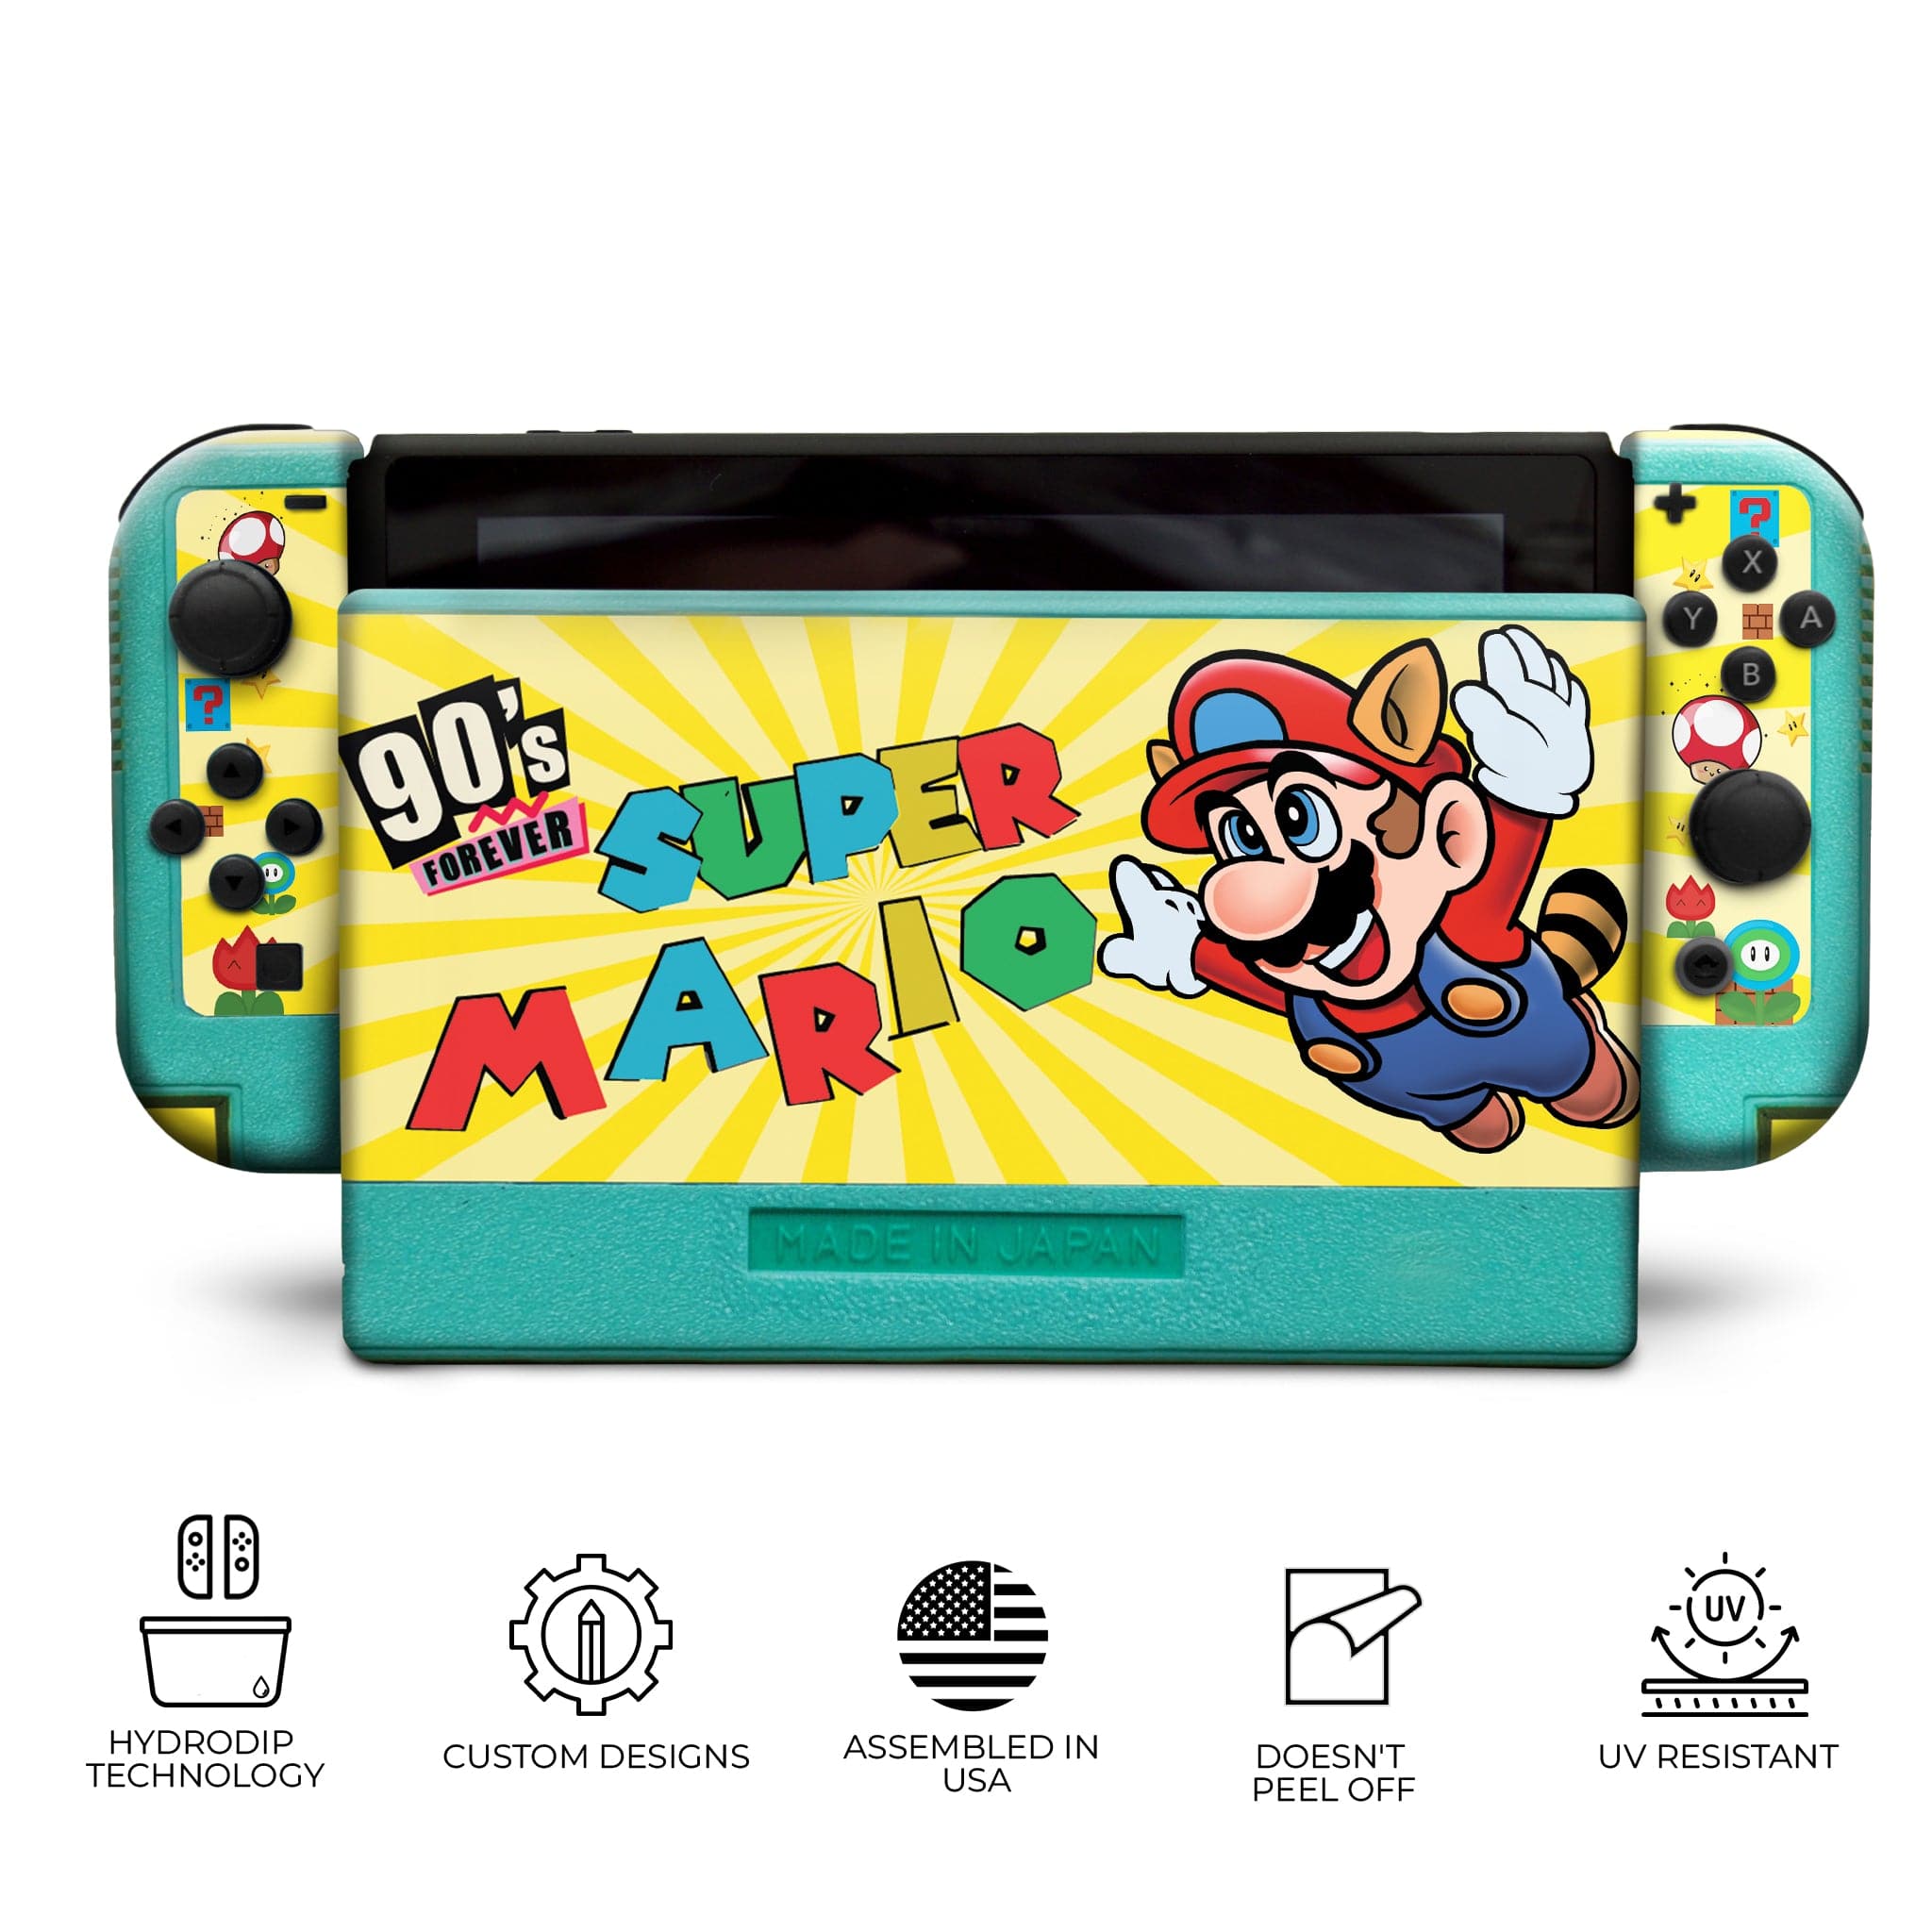 Mario Retro inspired Nintendo Switch Console Full Set